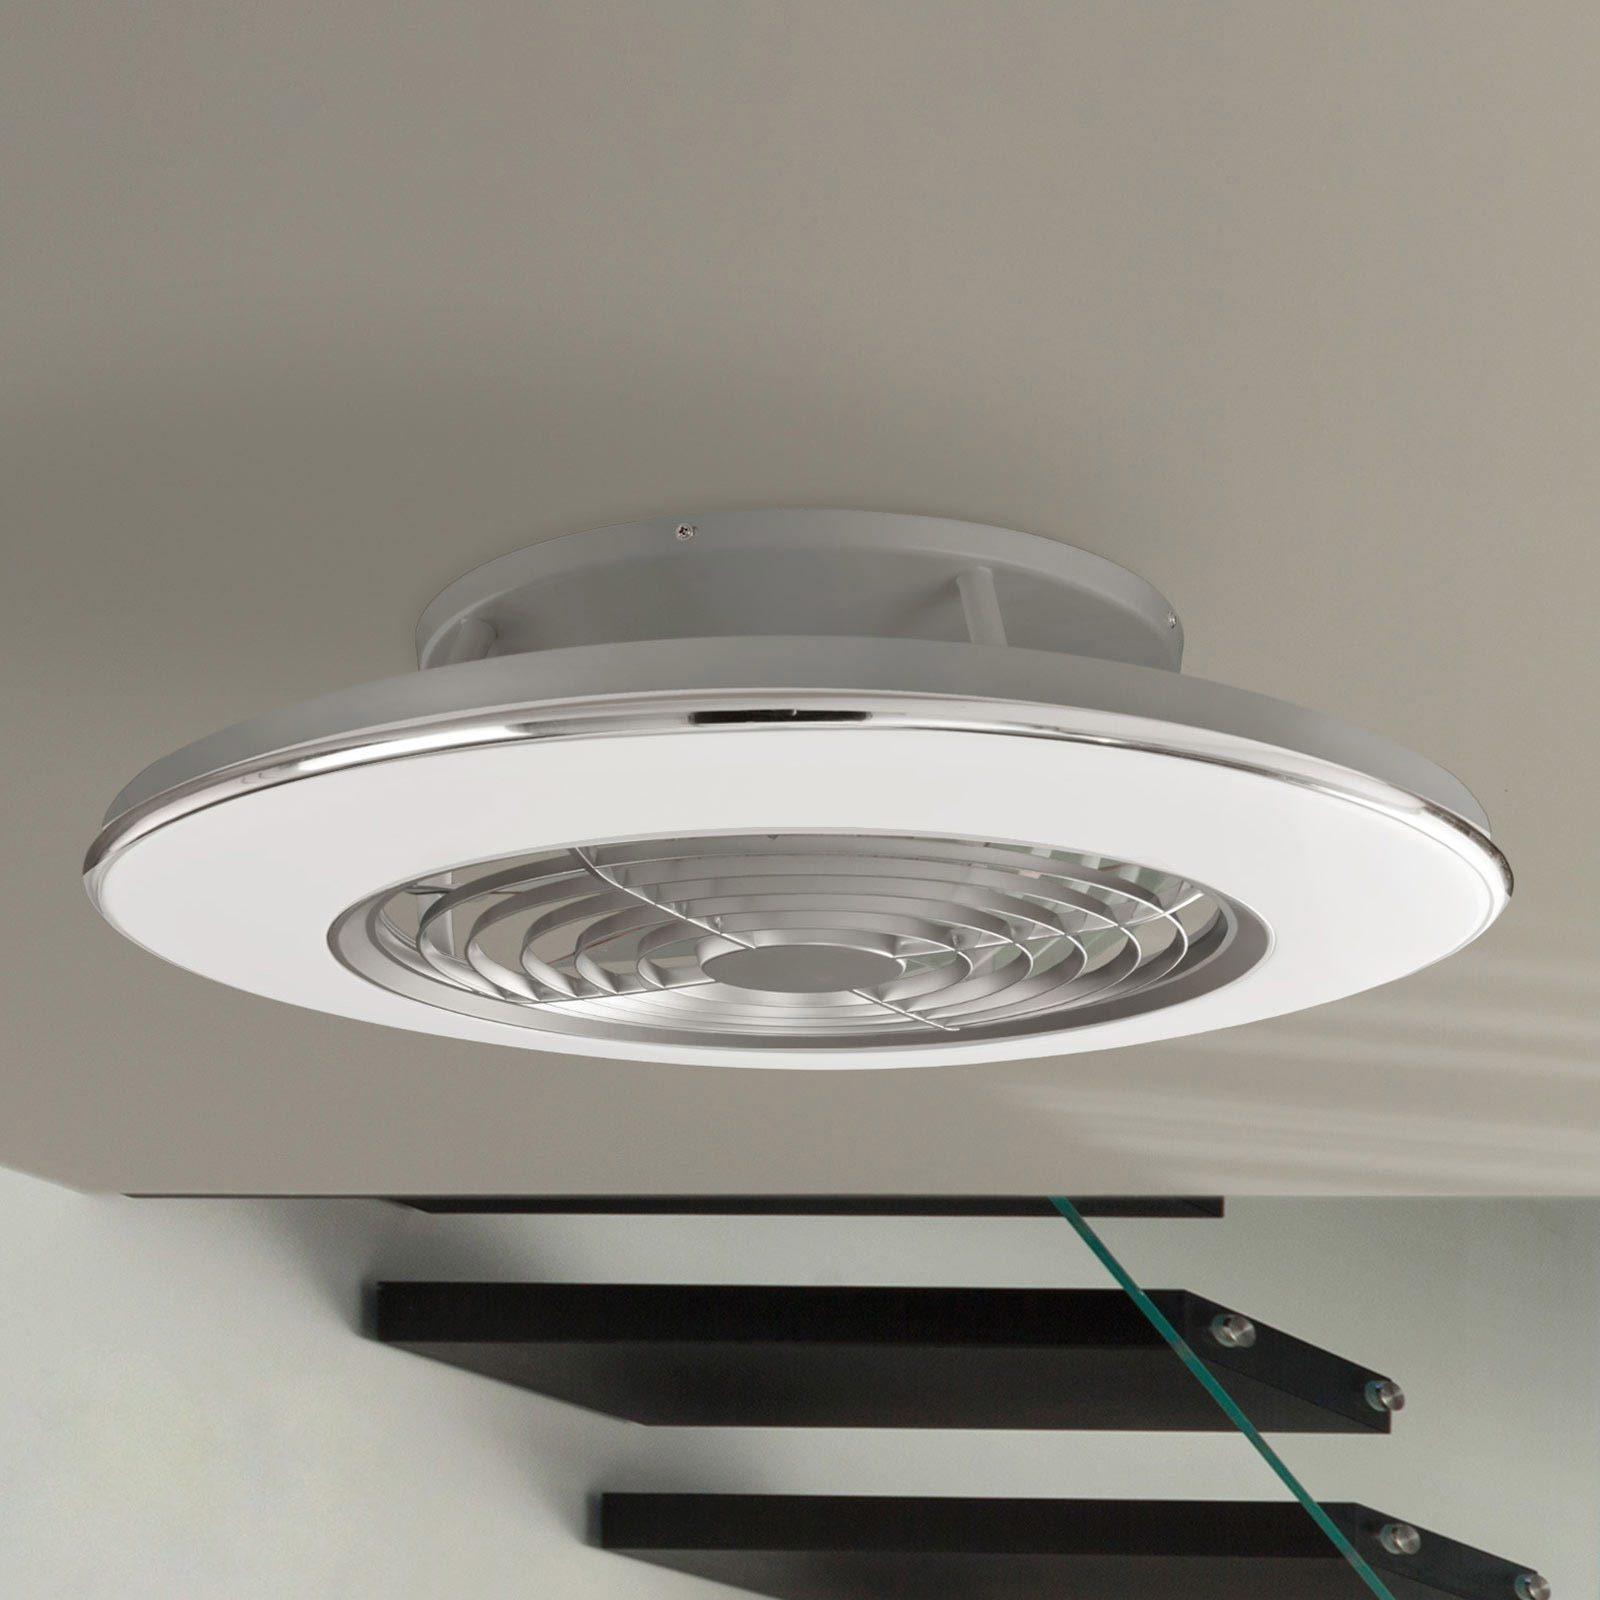 Alisio LED ceiling fan, app-controllable, chrome